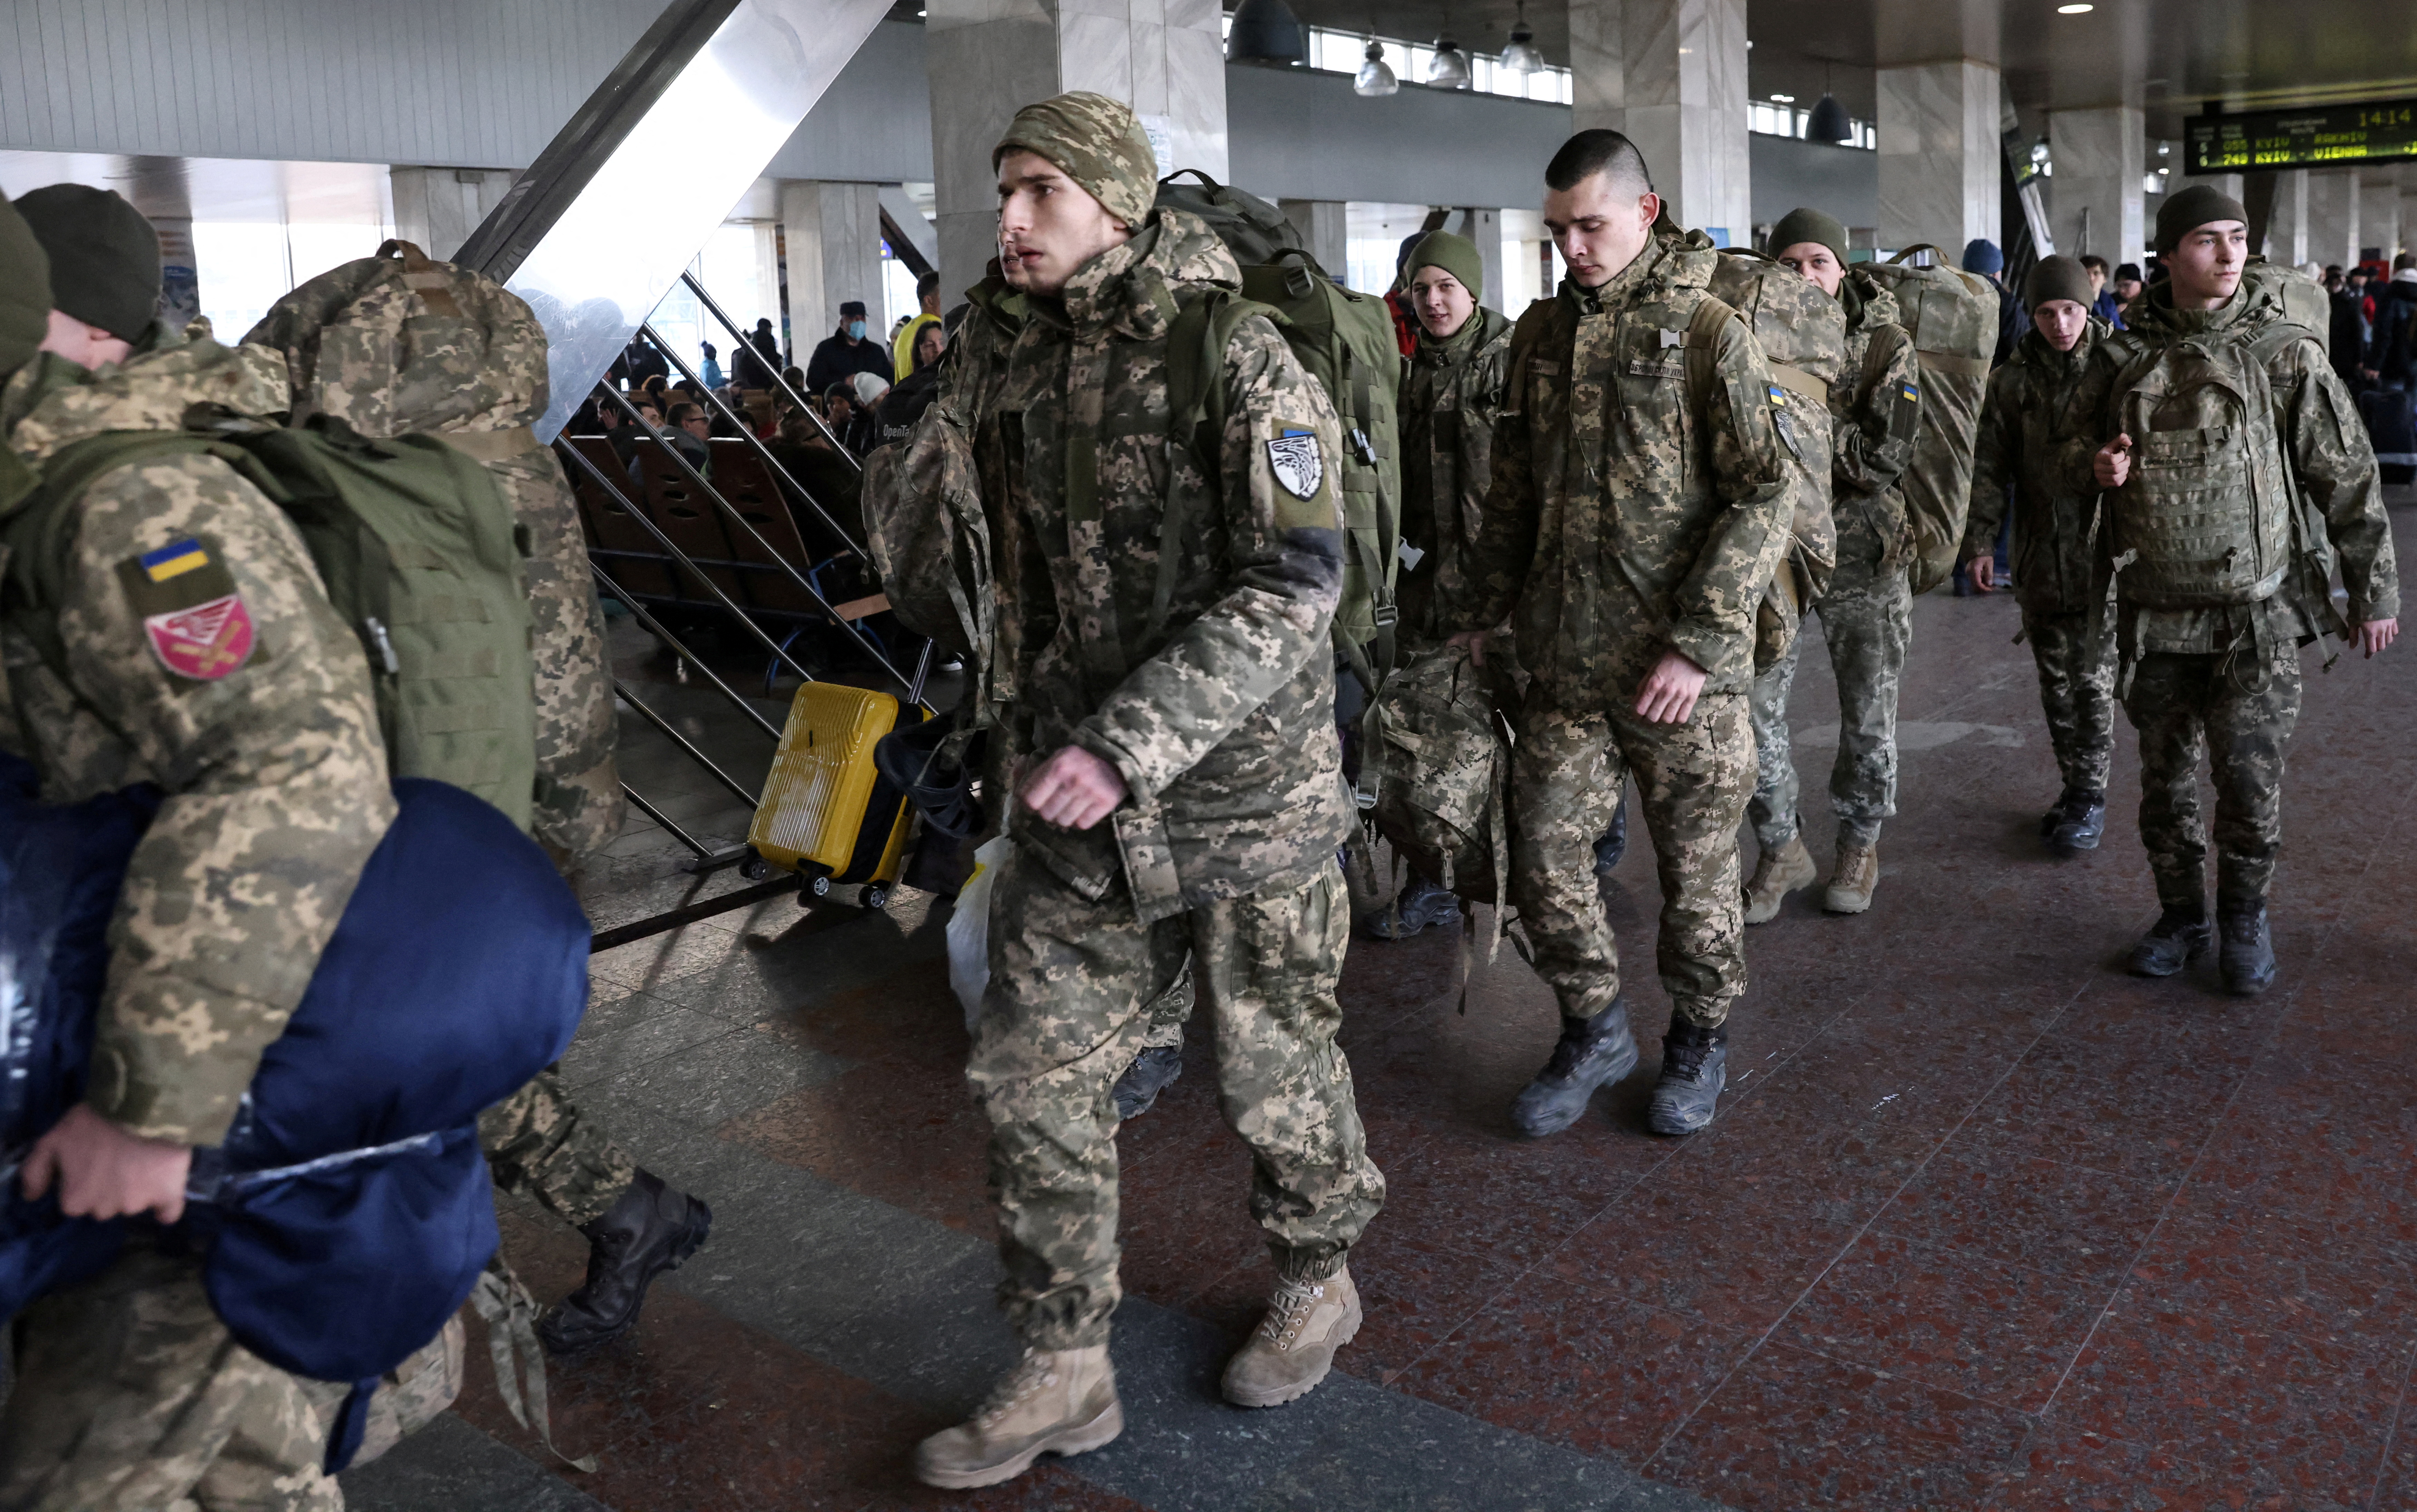 Ukrainian soldiers walk at Kyiv central train station, Ukraine, February 25, 2022. REUTERS/Umit Bektas